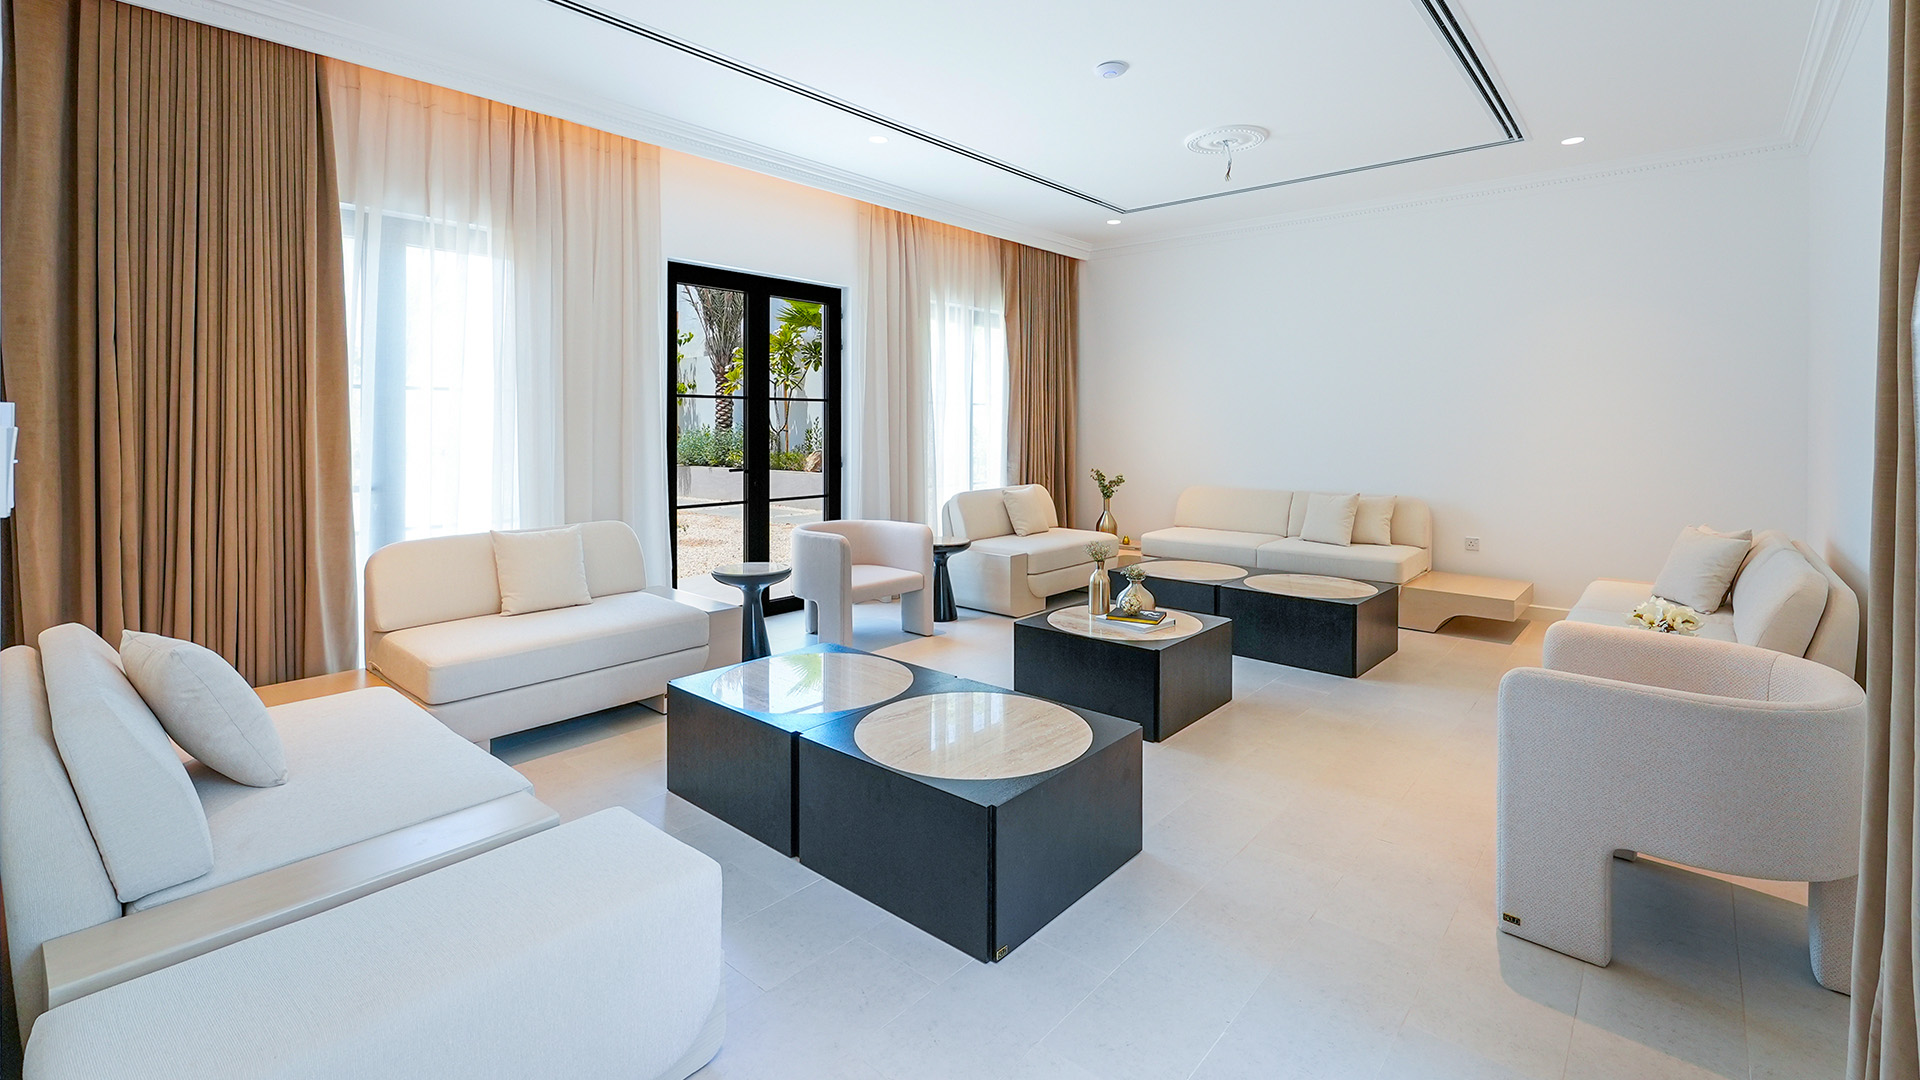 Dubai Villa Furnishings: From Vision to Reality